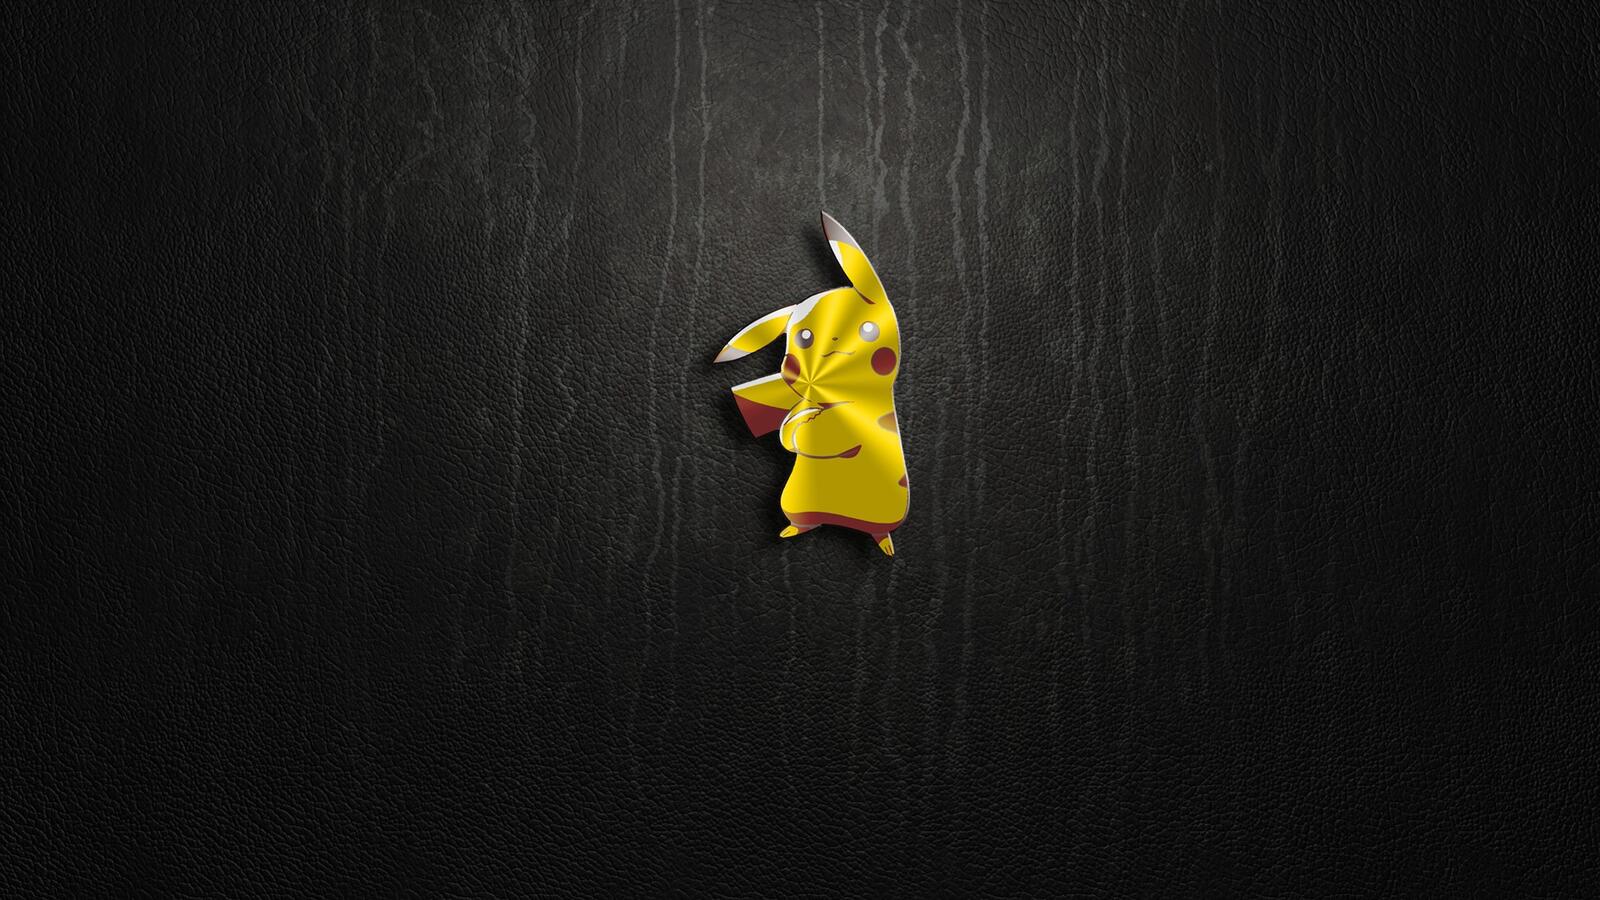 Free photo Pikachu keychain on a black background